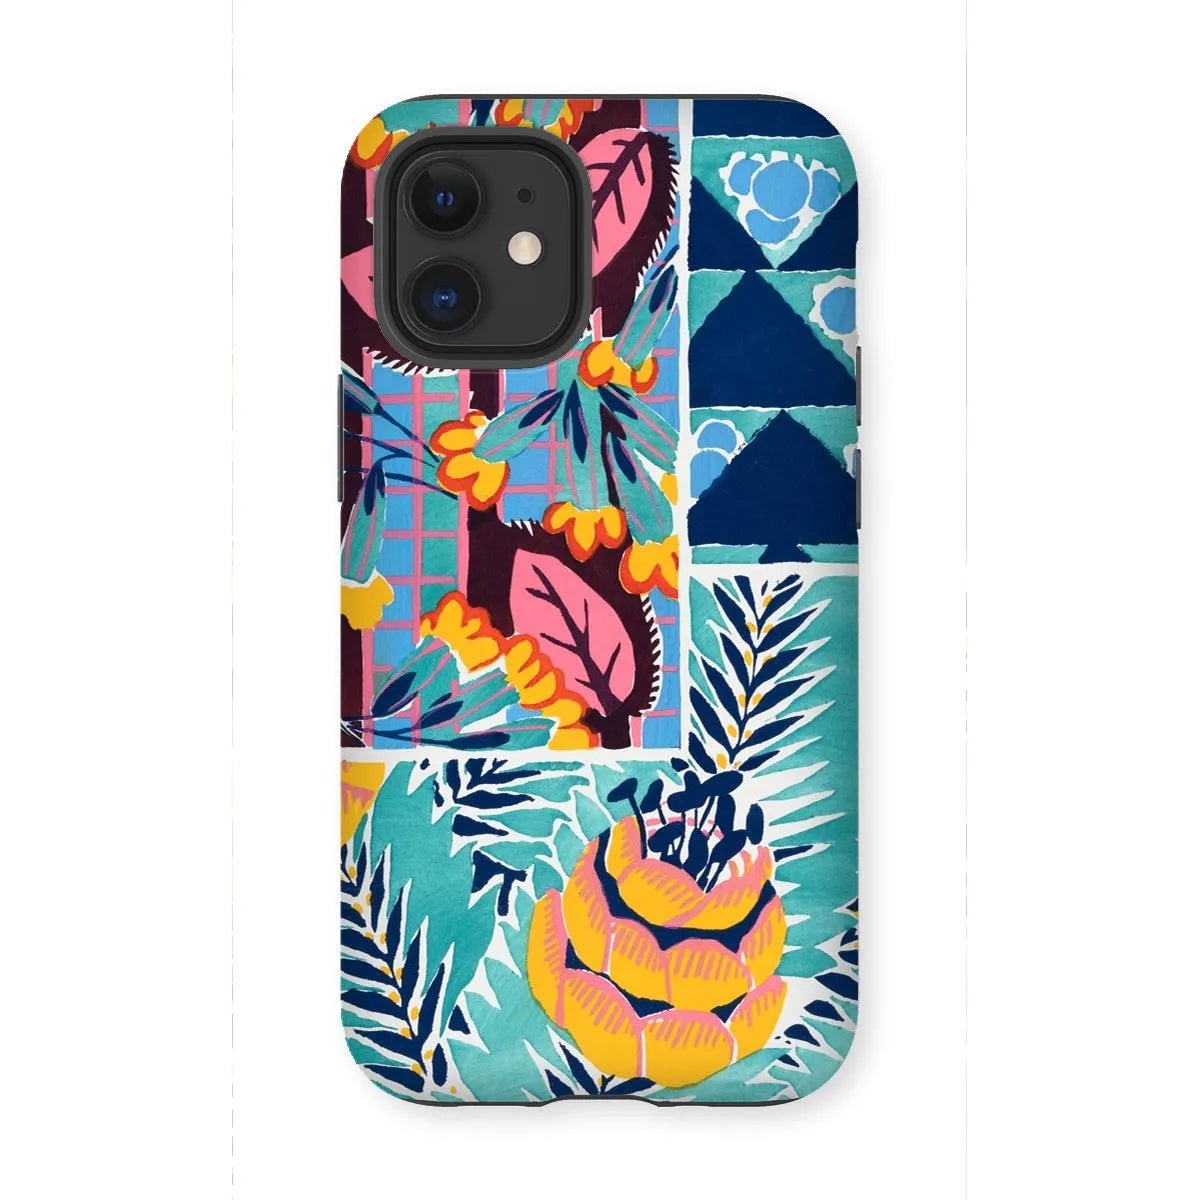 Fabric & Rugs - Pochoir Patterns Phone Case - E. A. Séguy - Iphone 12 Mini / Matte - Mobile Phone Cases - Aesthetic Art